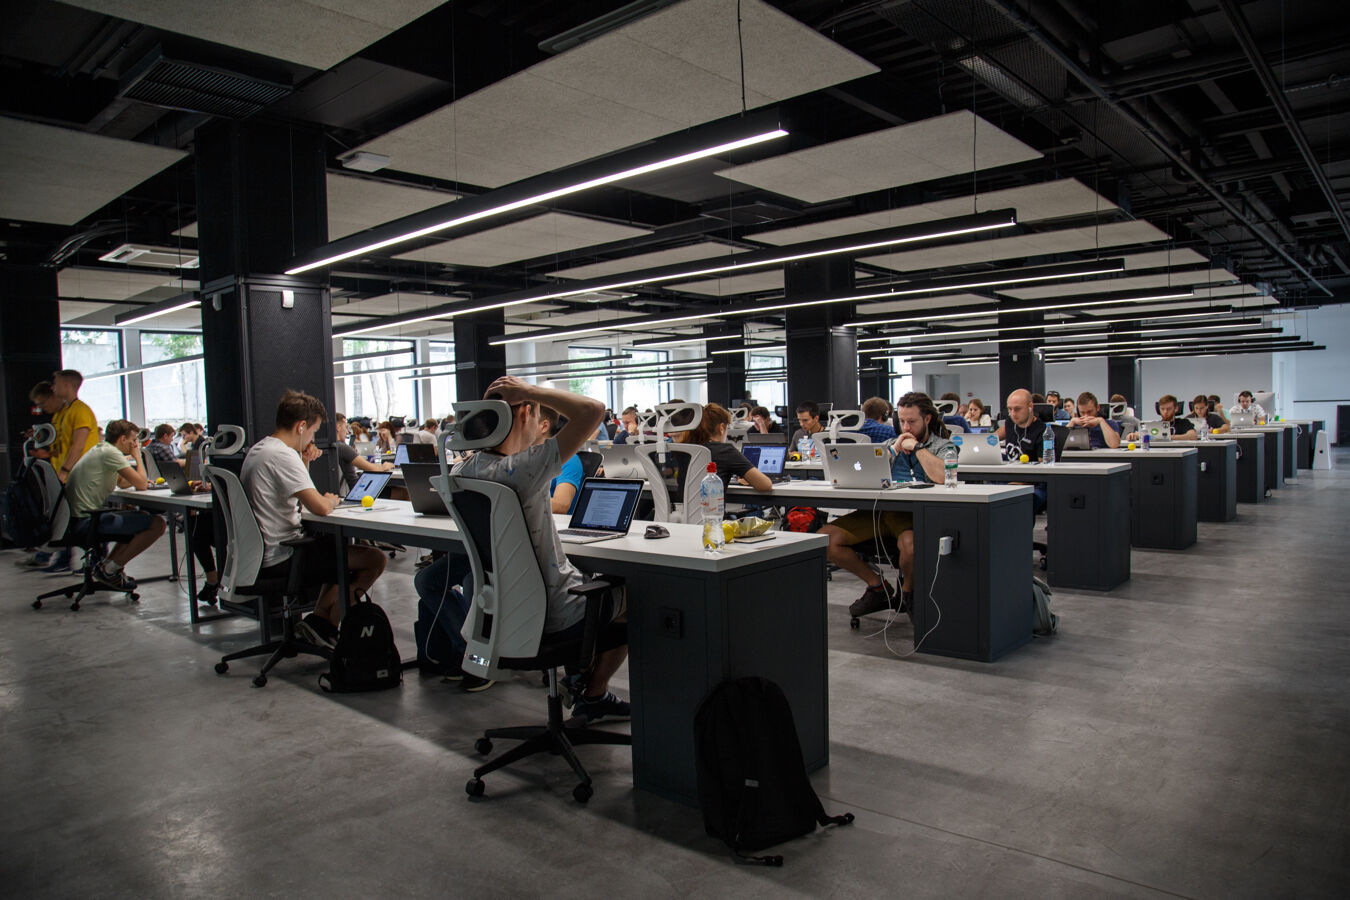 A modern office floor full of people working behind laptops